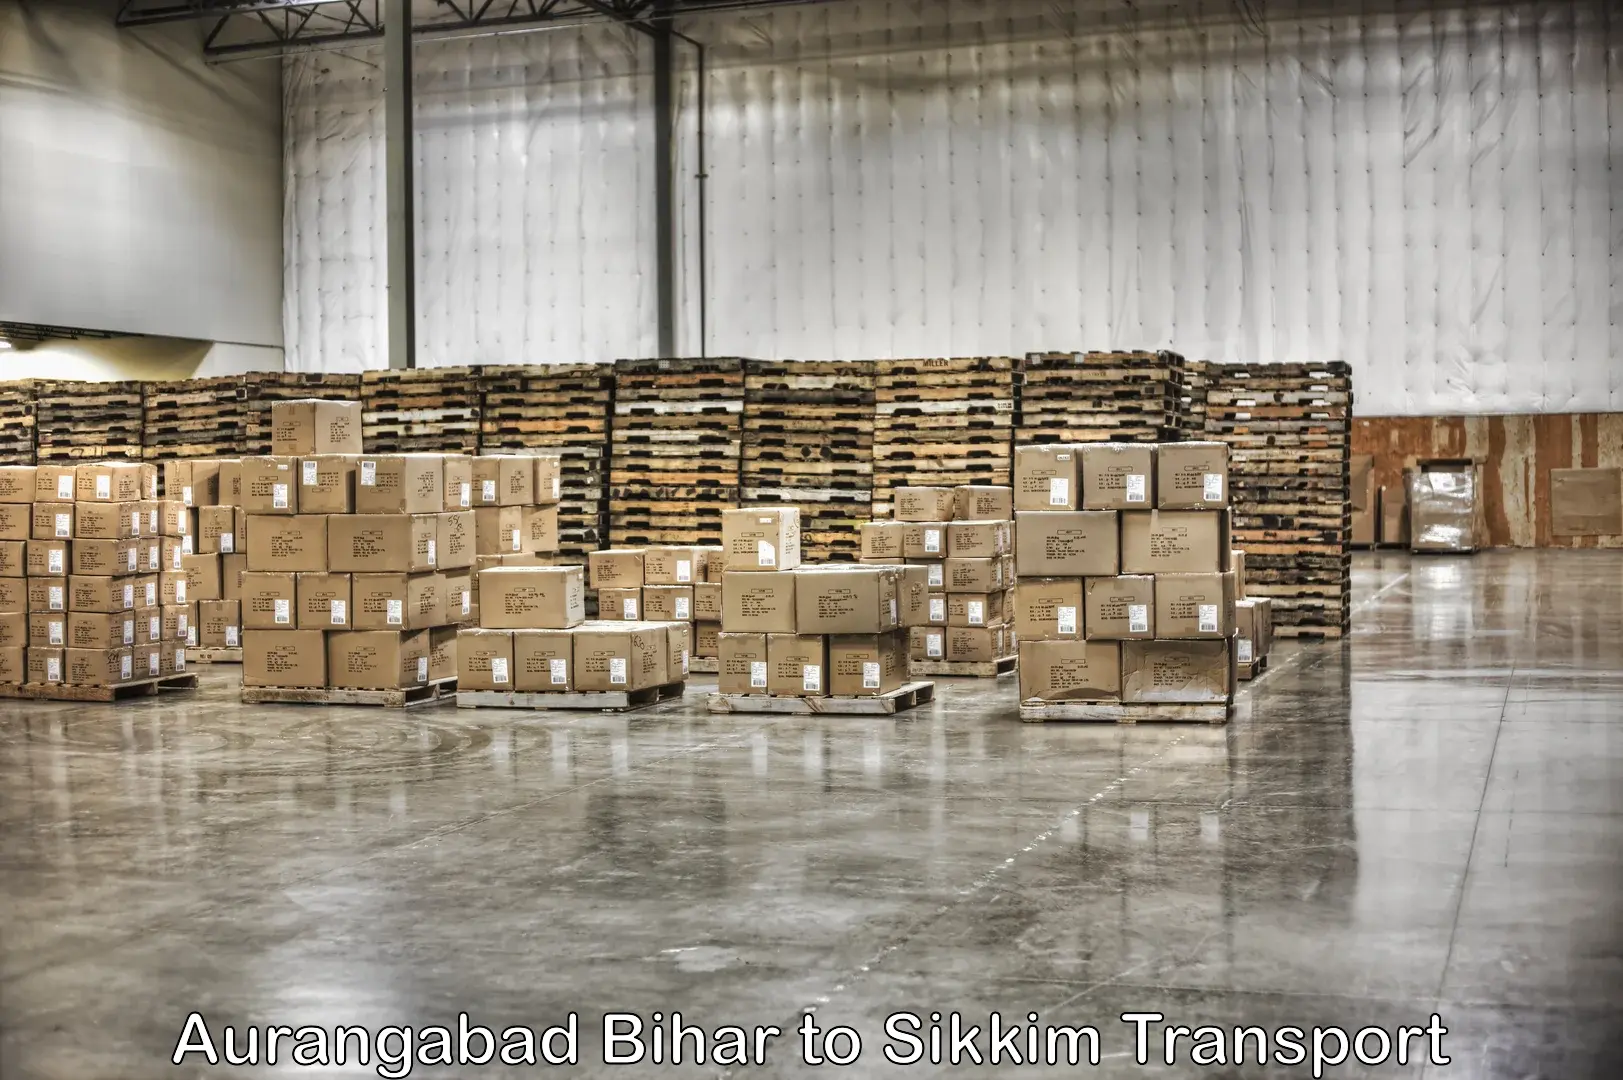 Truck transport companies in India Aurangabad Bihar to Jorethang